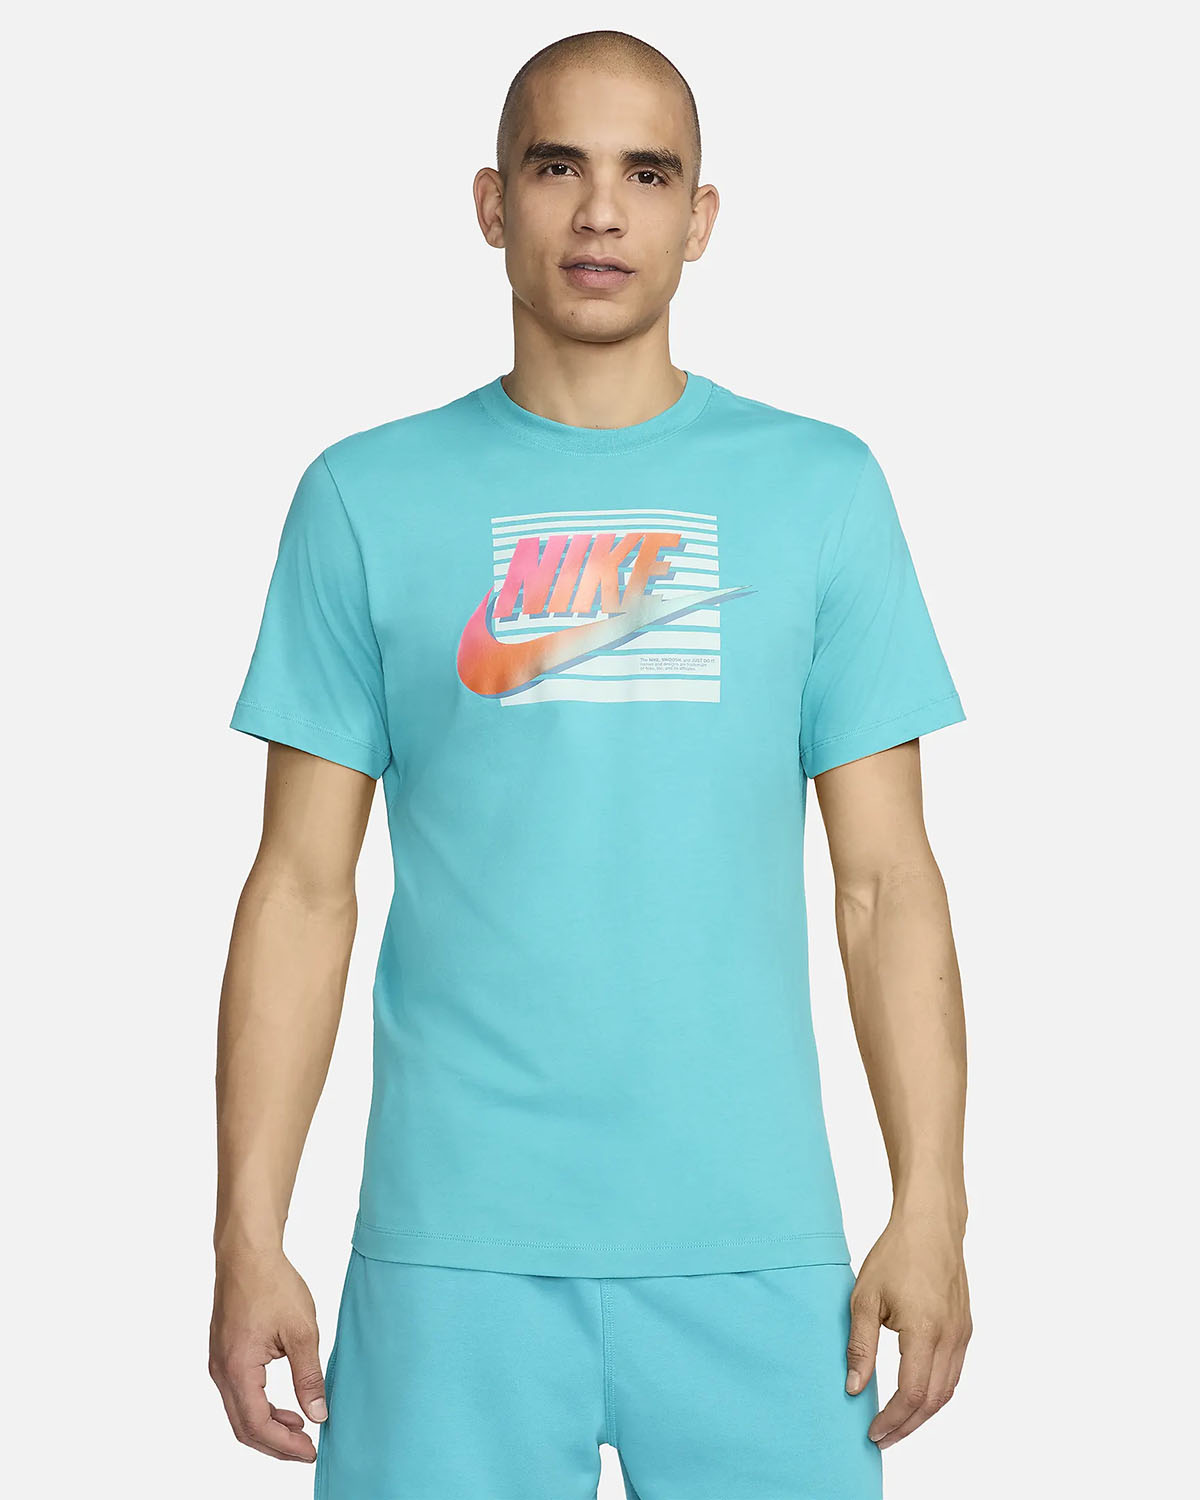 Nike Sportswear Graphic T Shirt Dusty Cactus